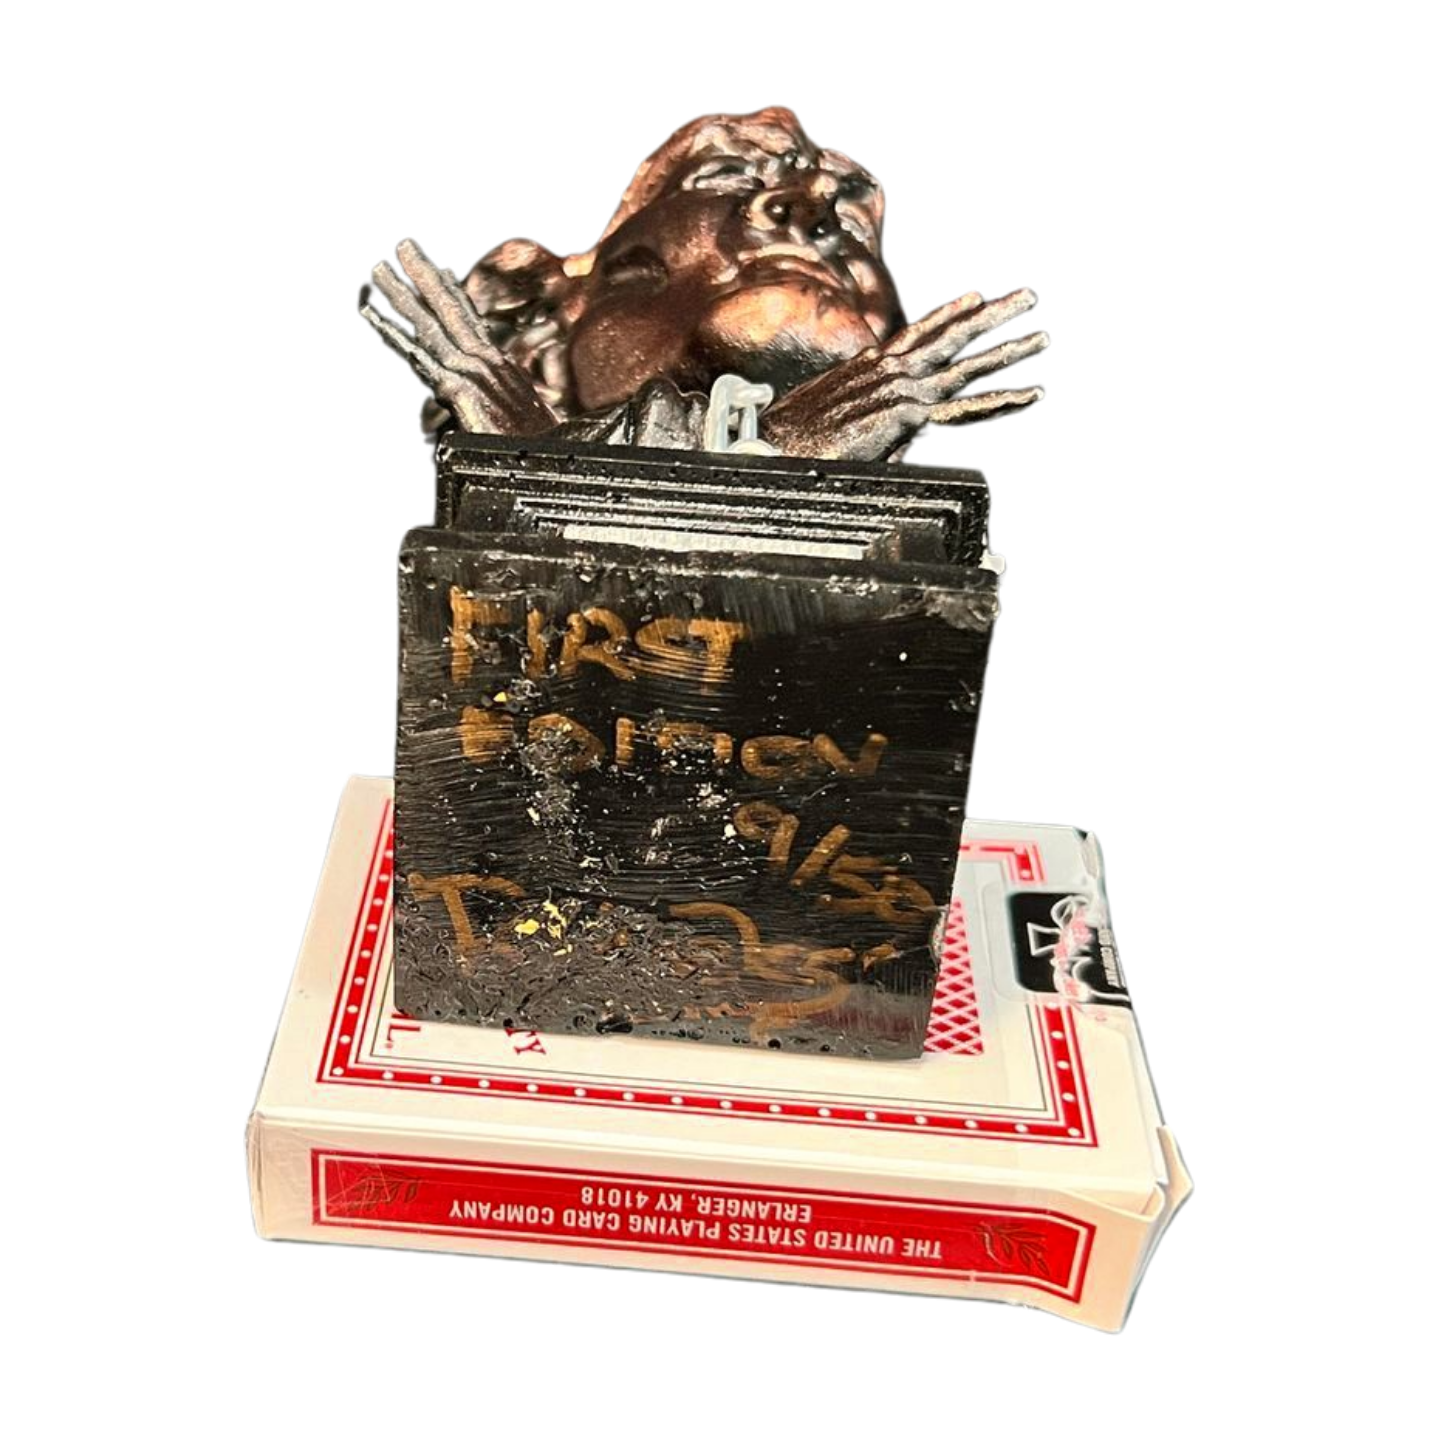 Limited Edition Bookshelf Bust of Harry Houdini